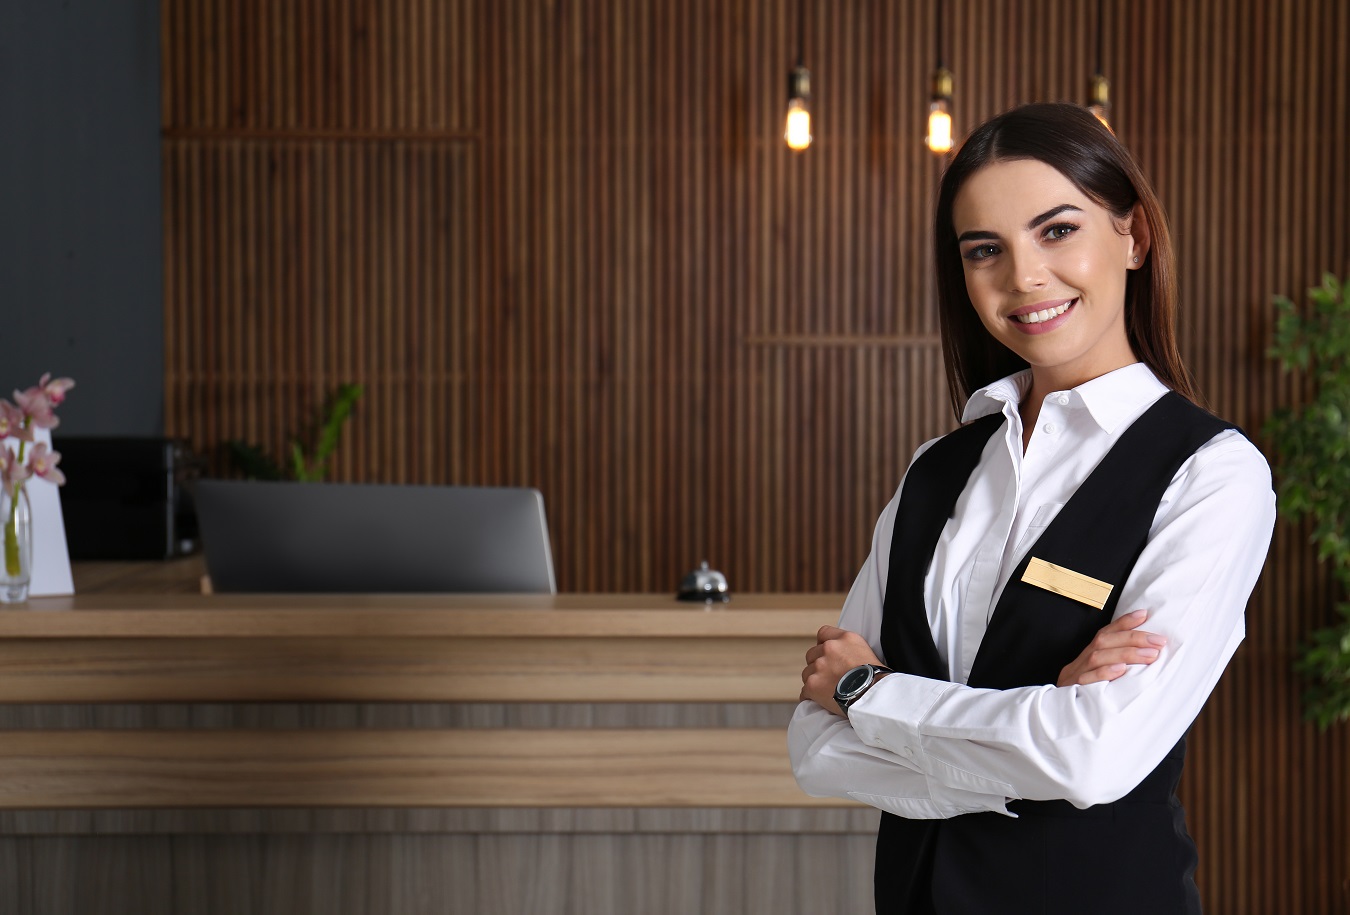 VIP Concierge and Travel Concierge Services | Benada Travel Concierge Services